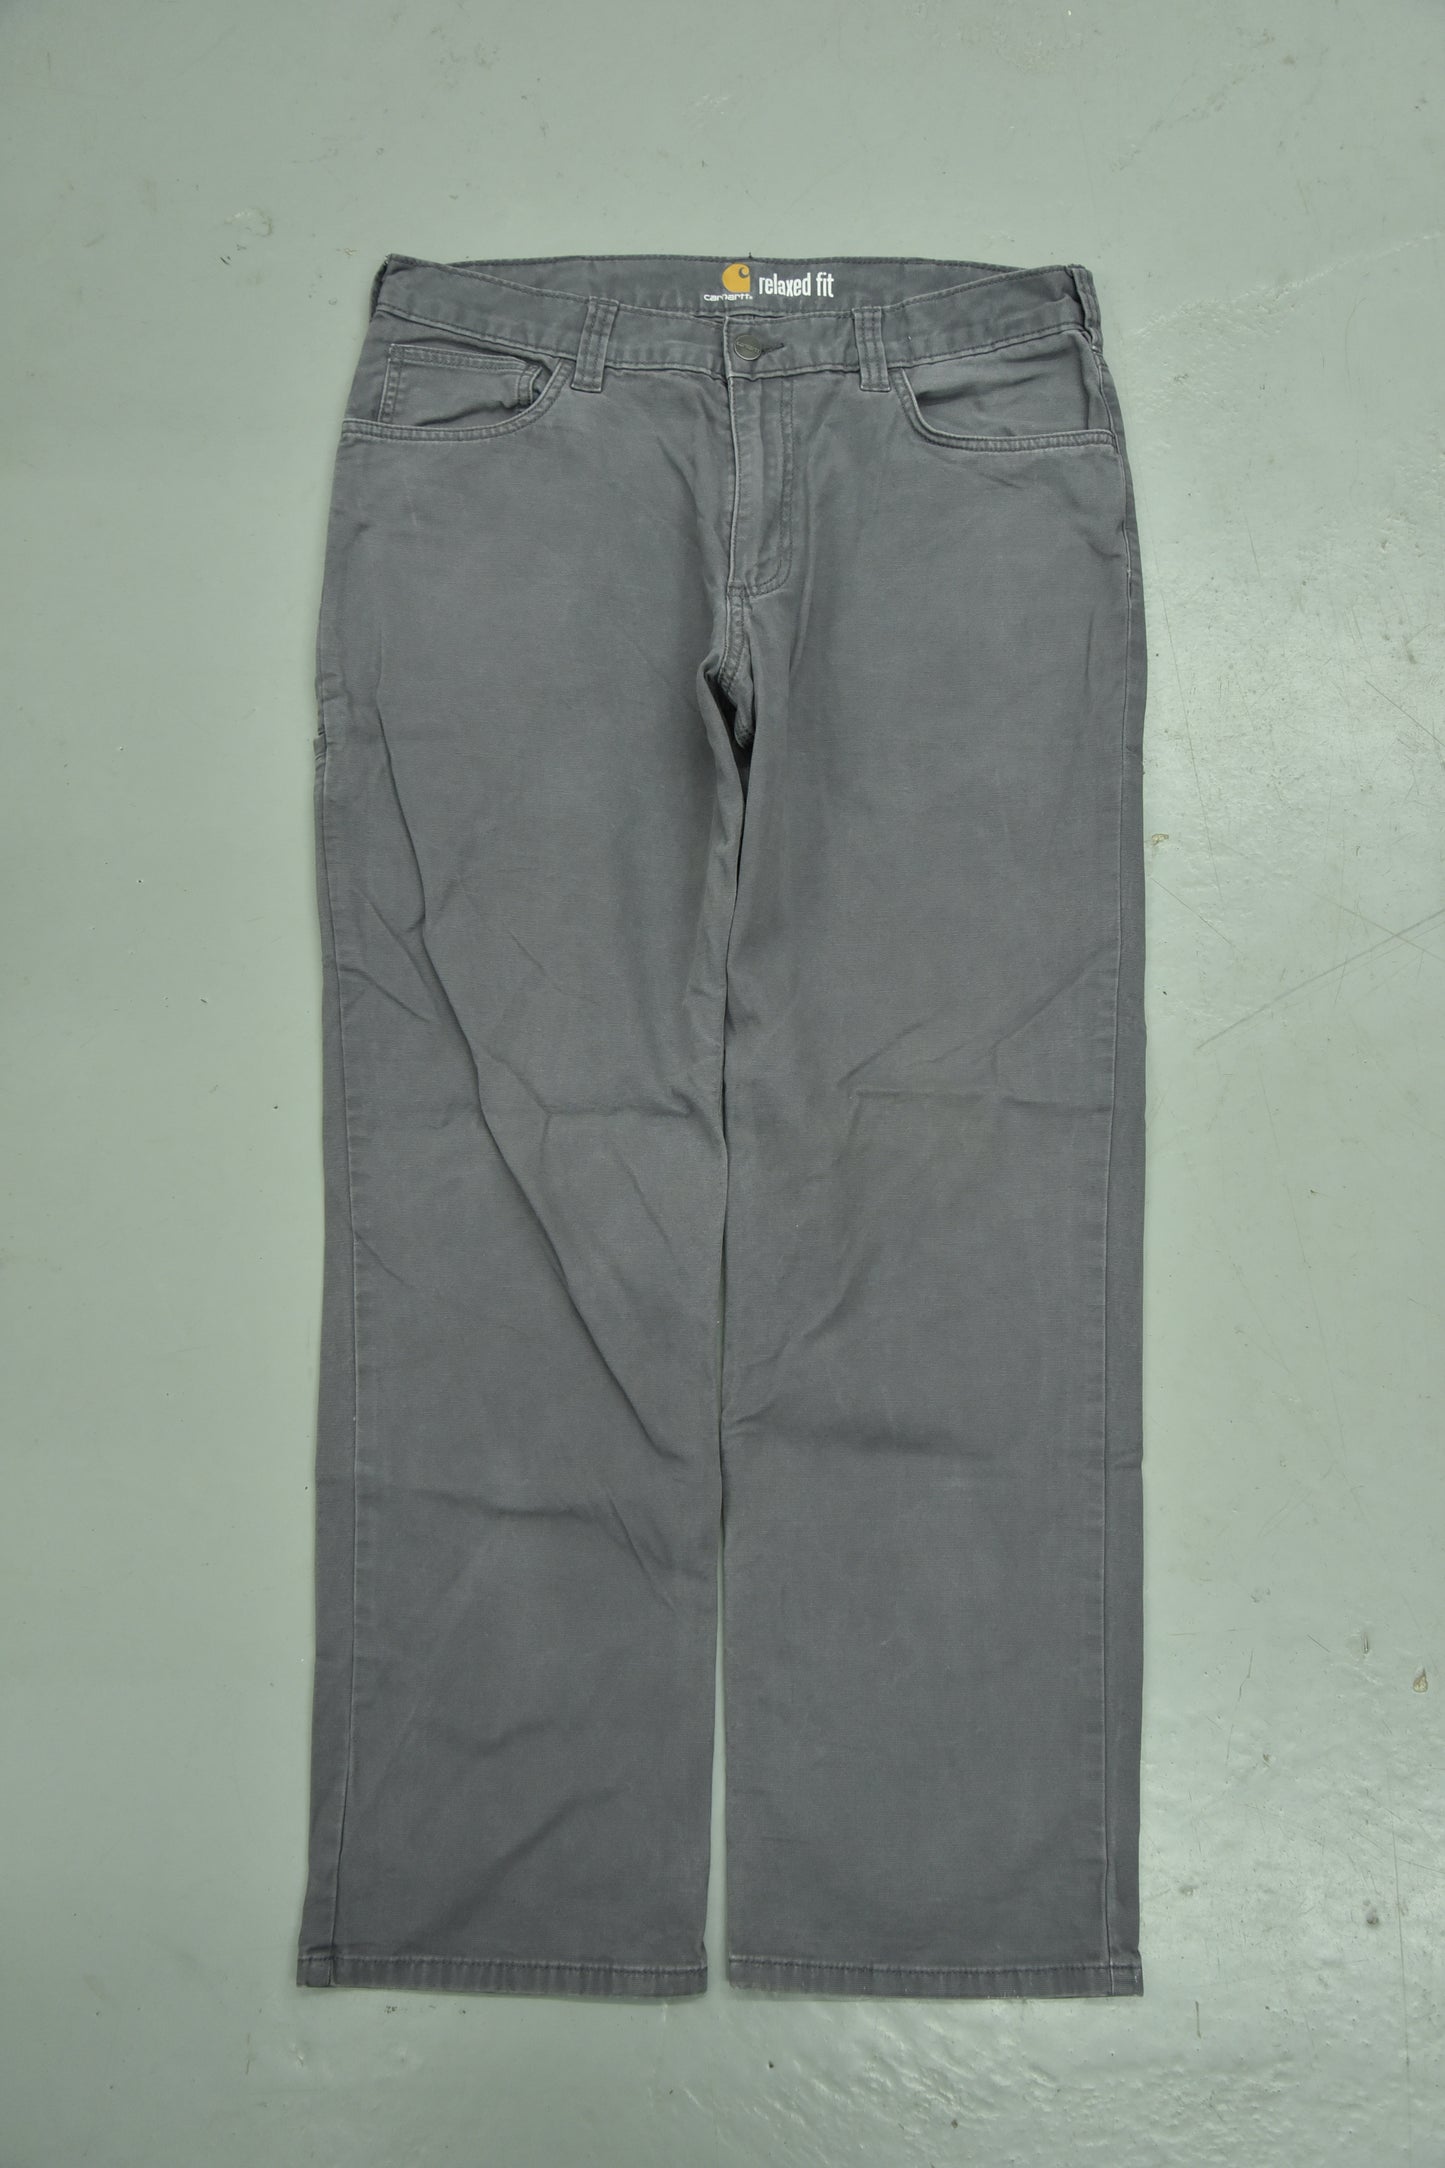 Carhartt Workwear Pants Black / 34x30